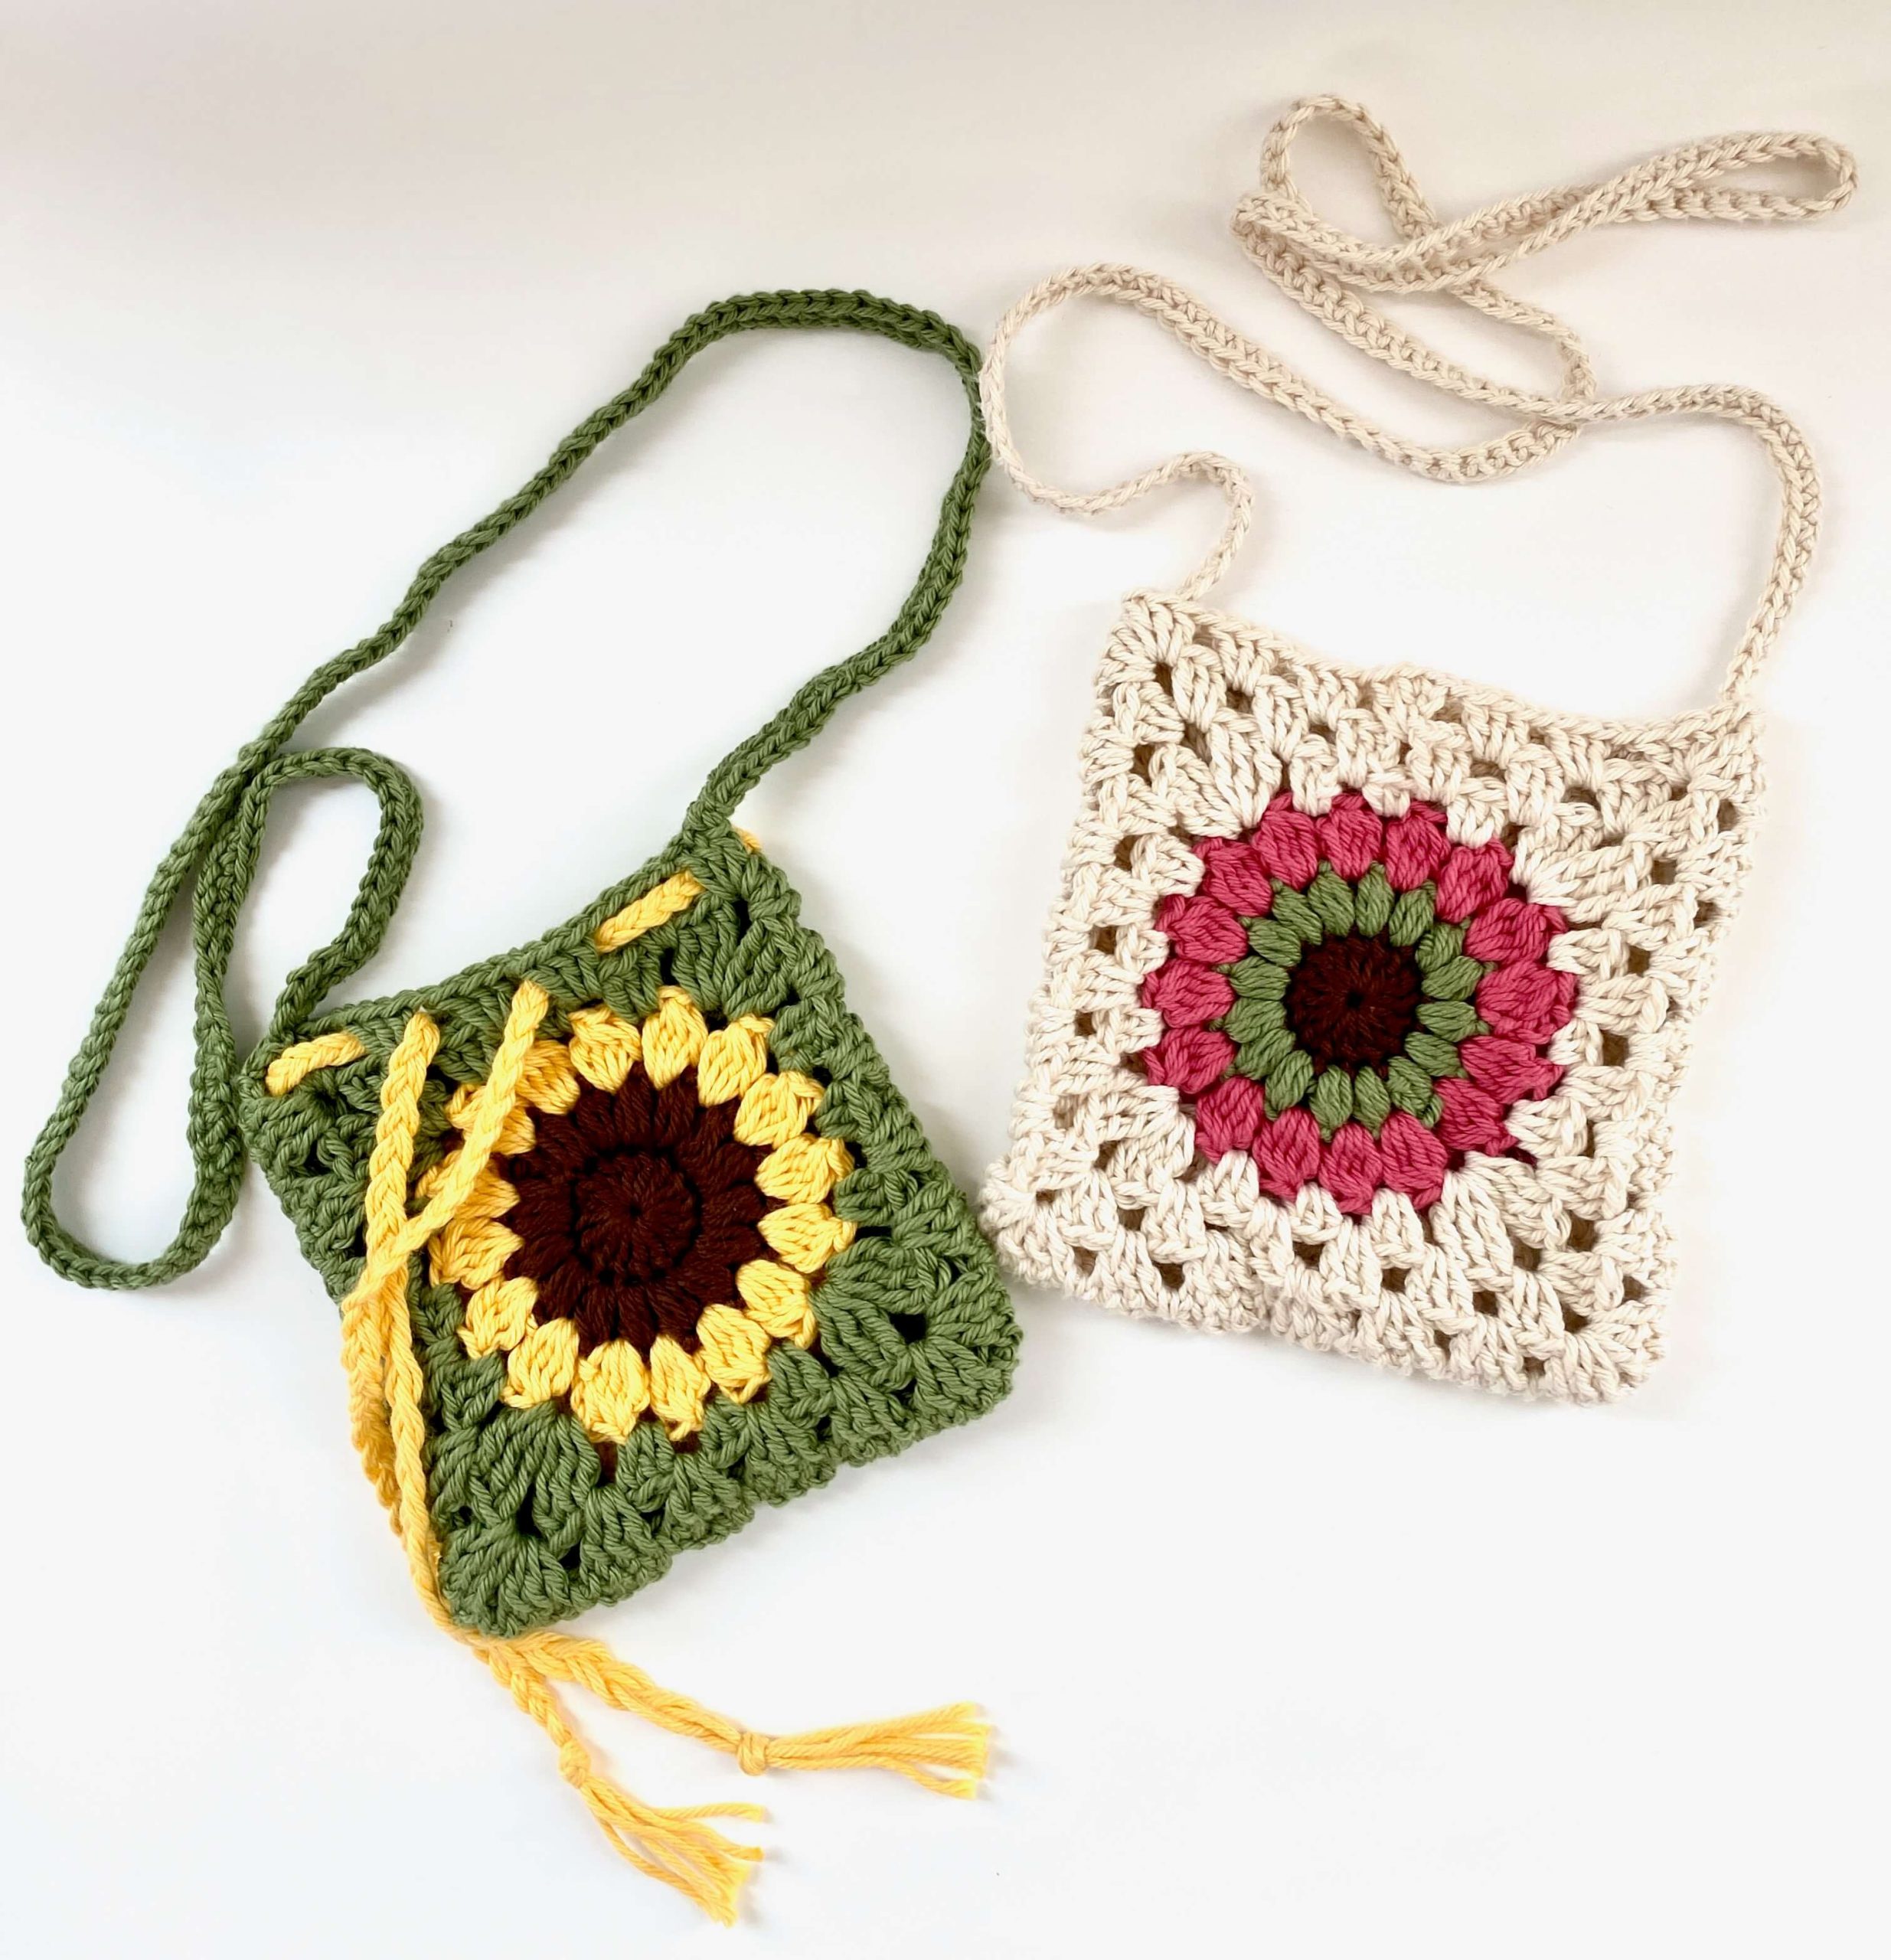 crochet granny square bag8 scaled